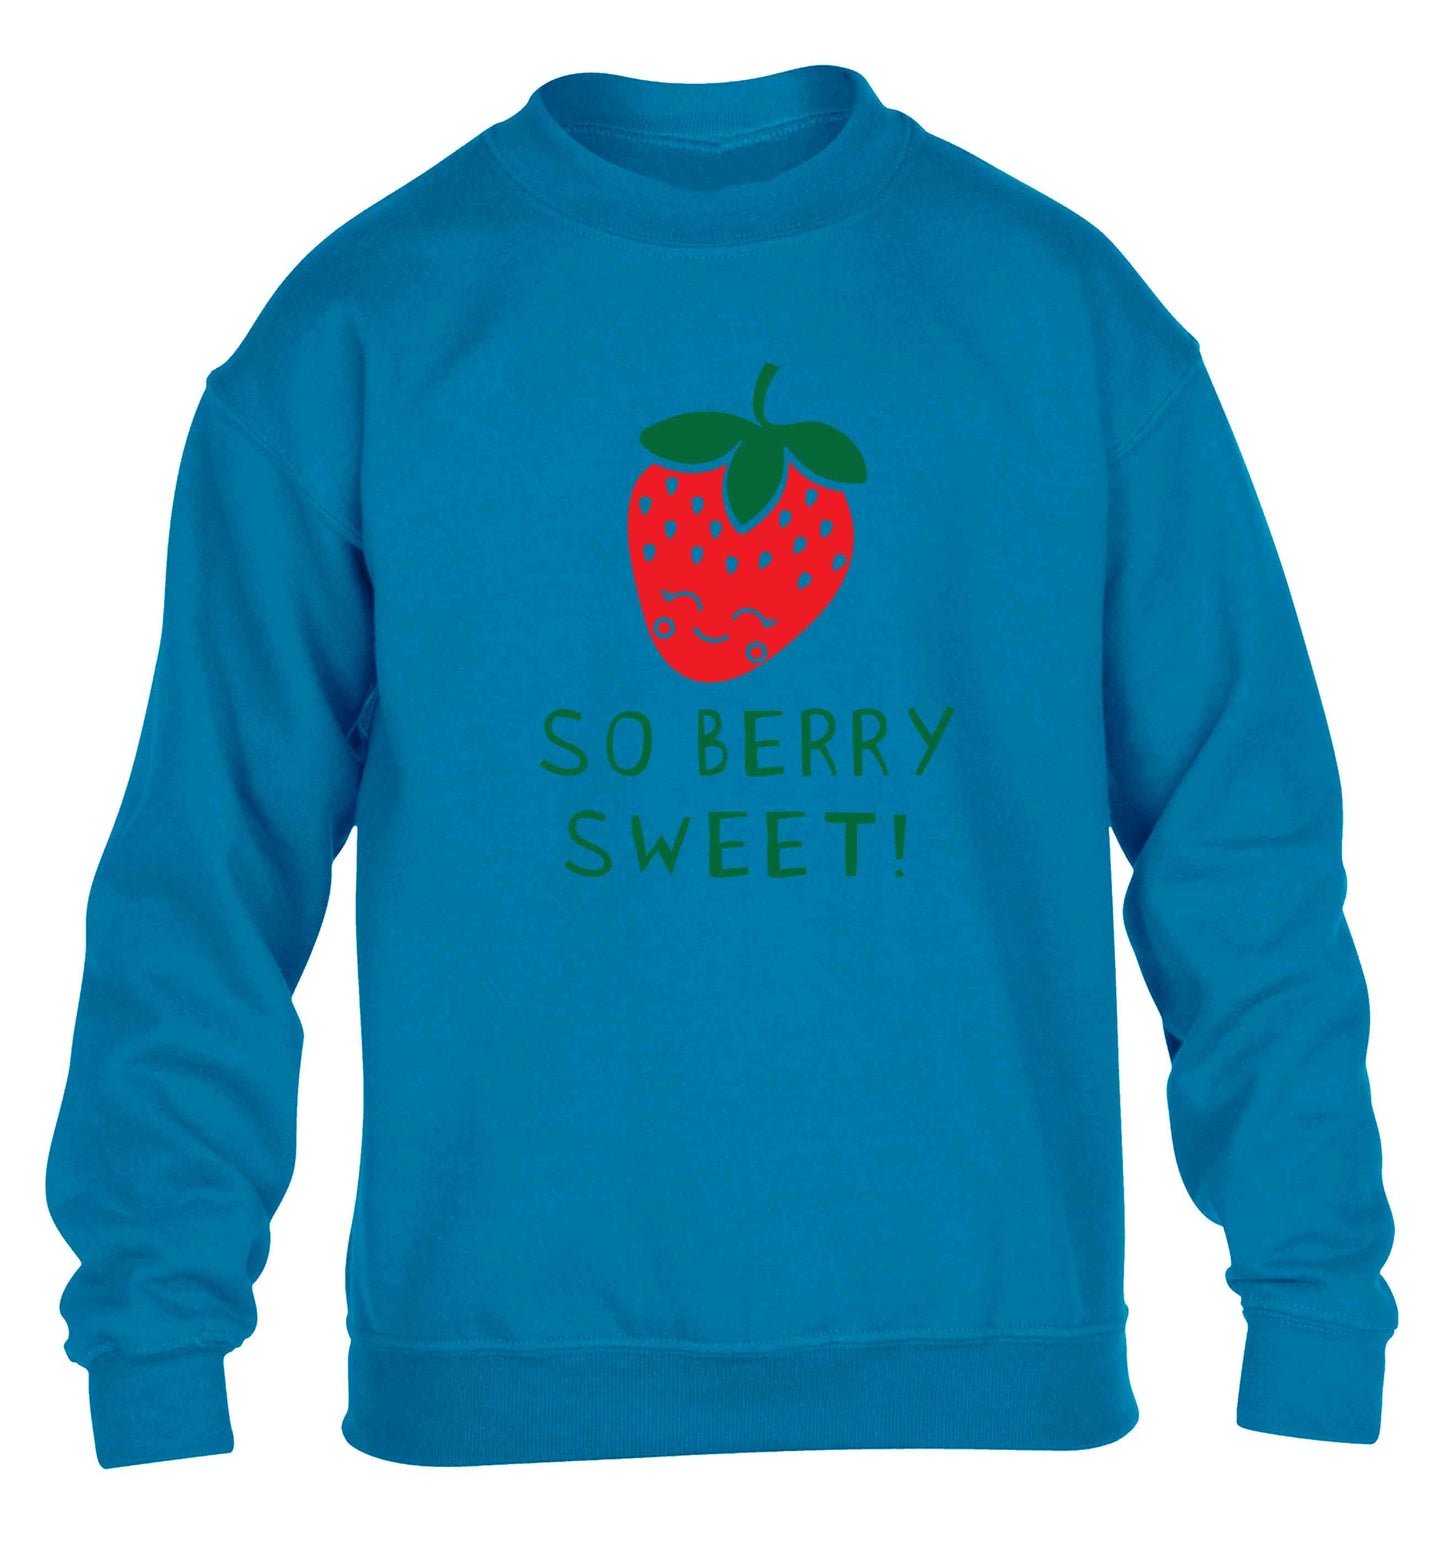 So berry sweet children's blue sweater 12-13 Years